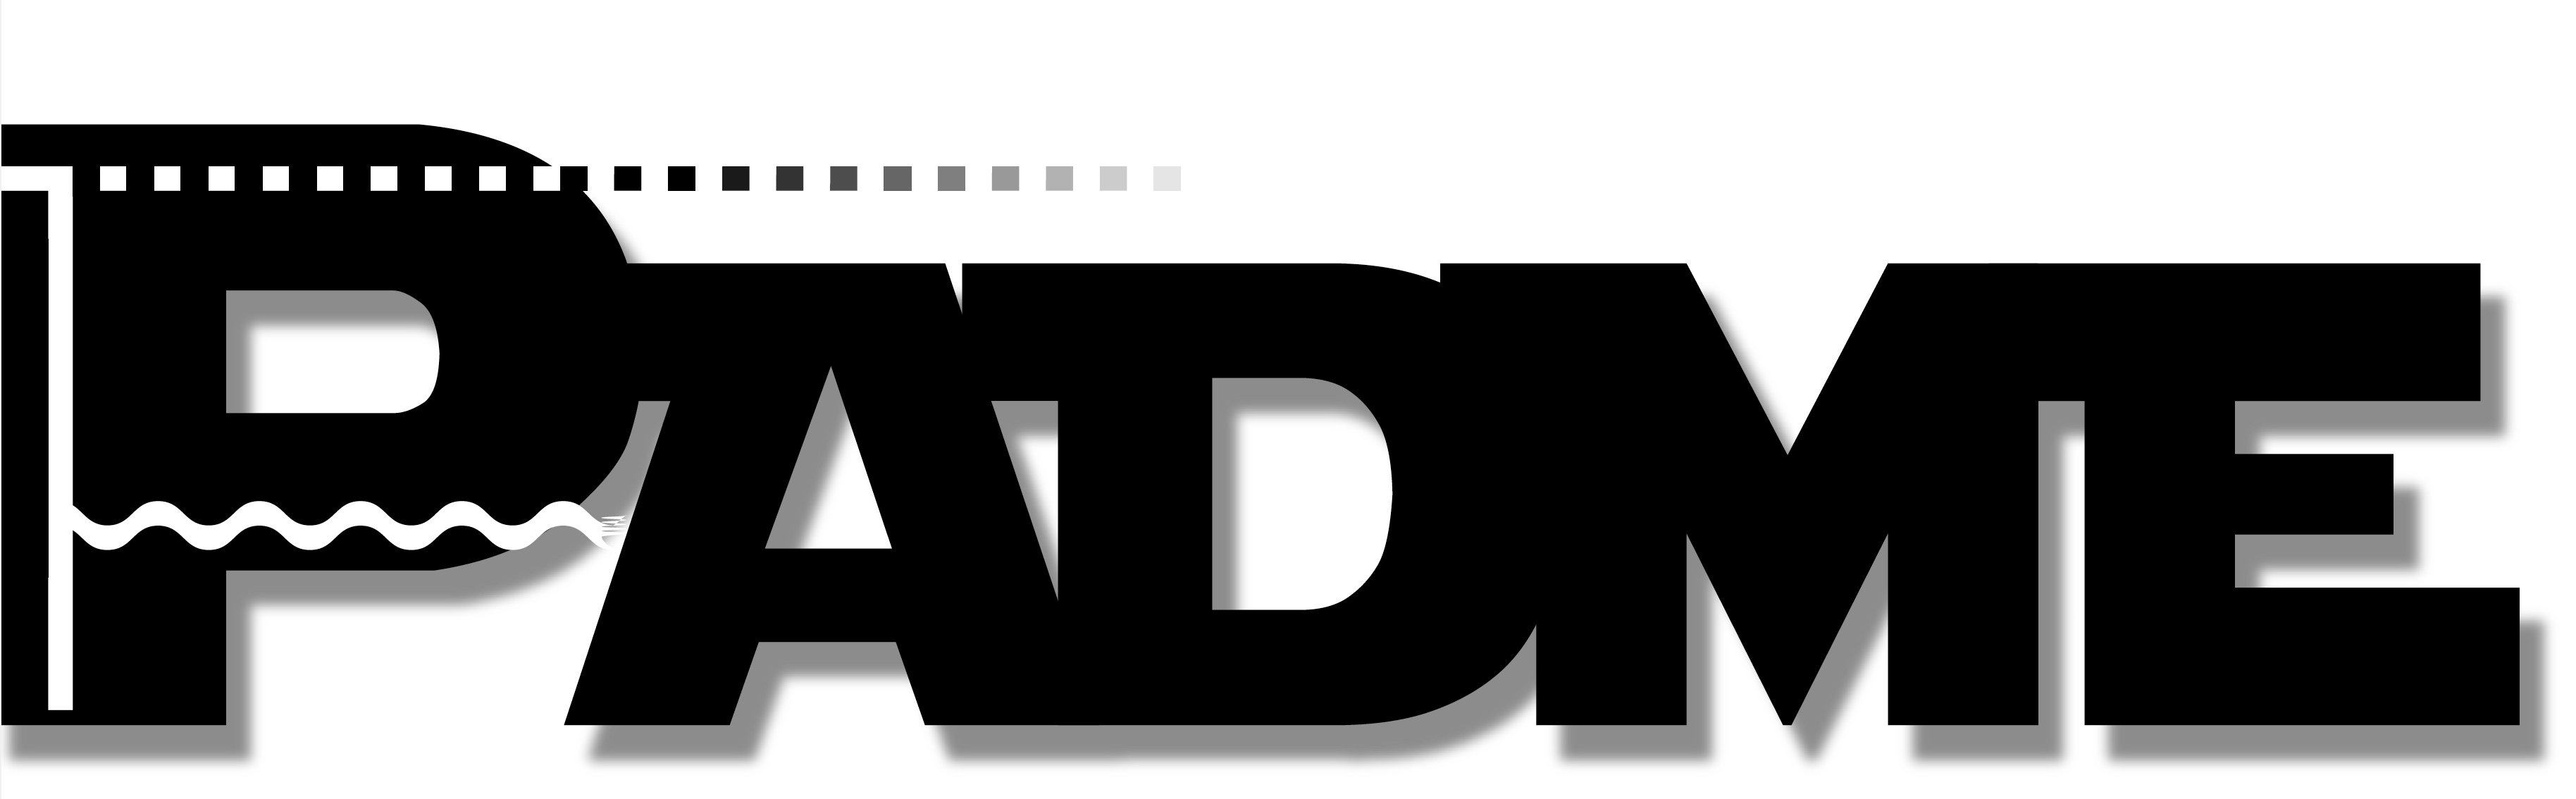 PADME logo